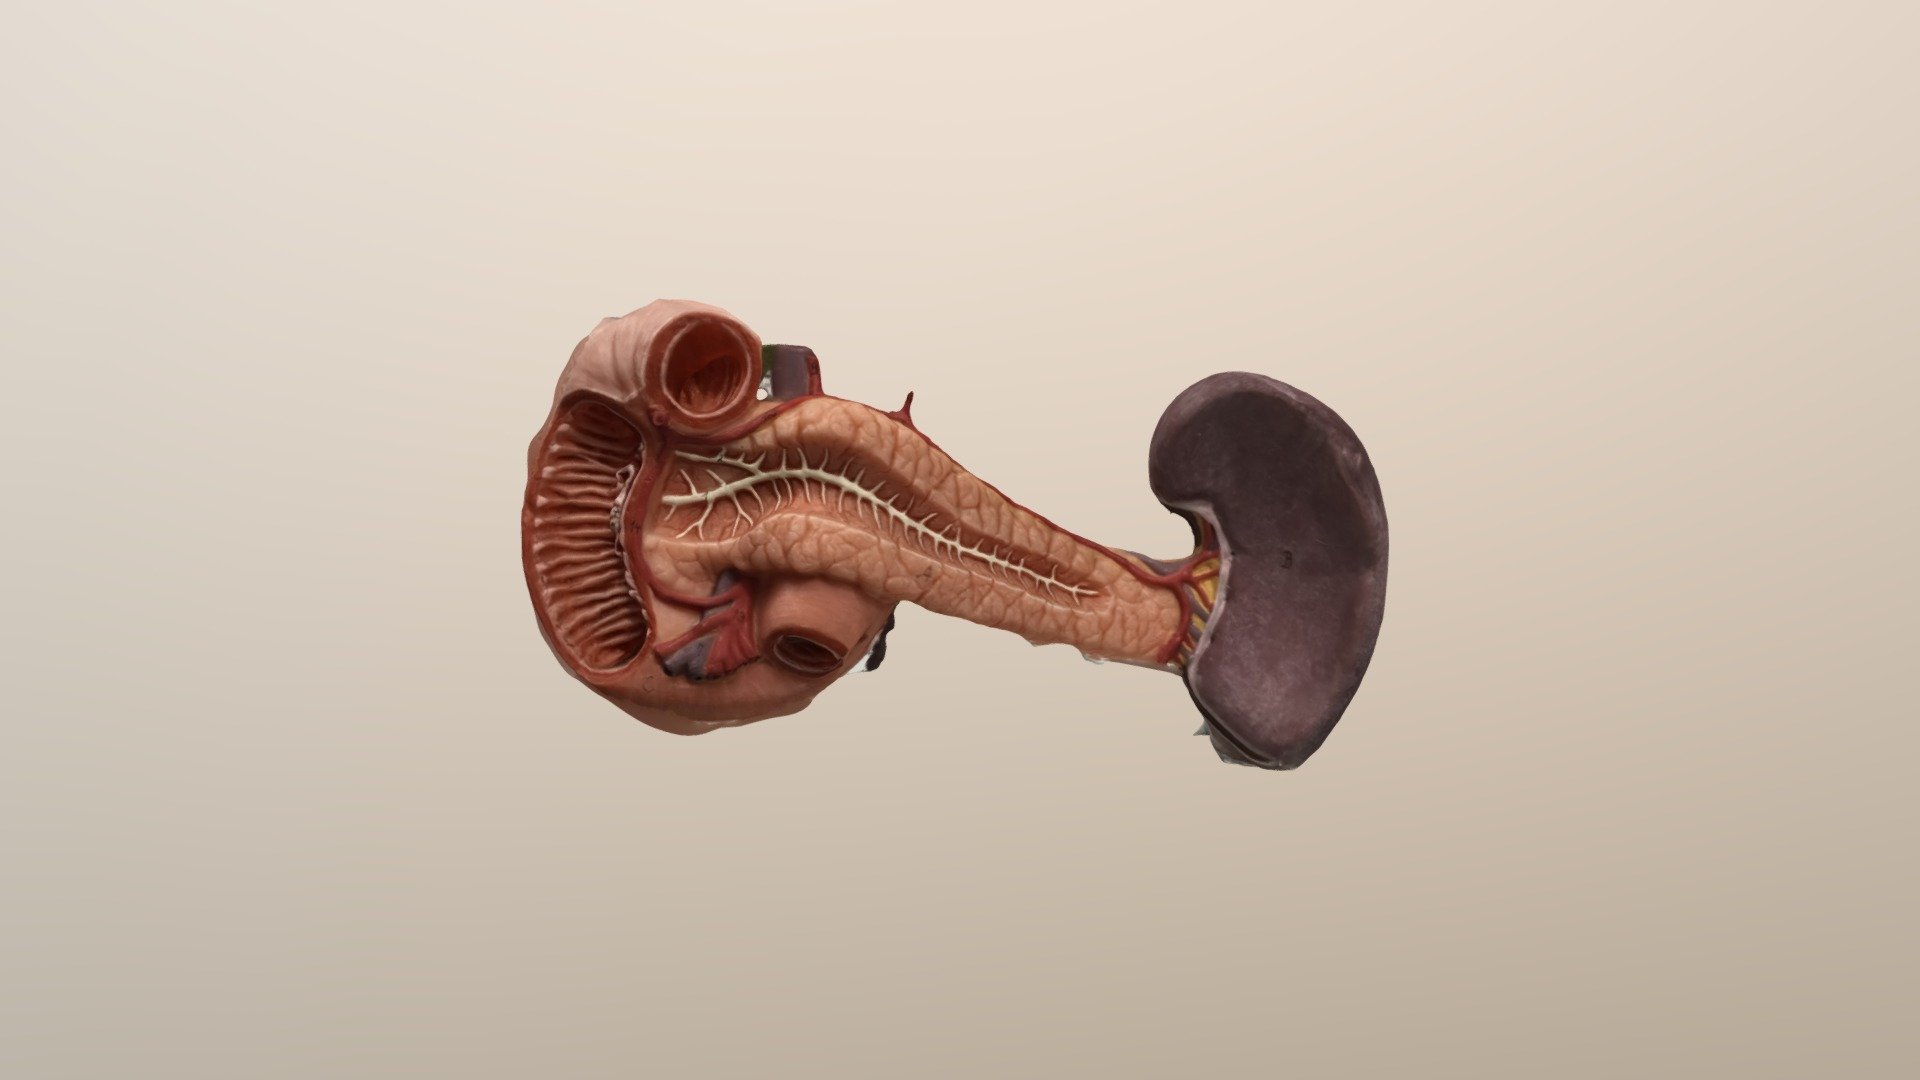 Gross anatomy of the Pancreas